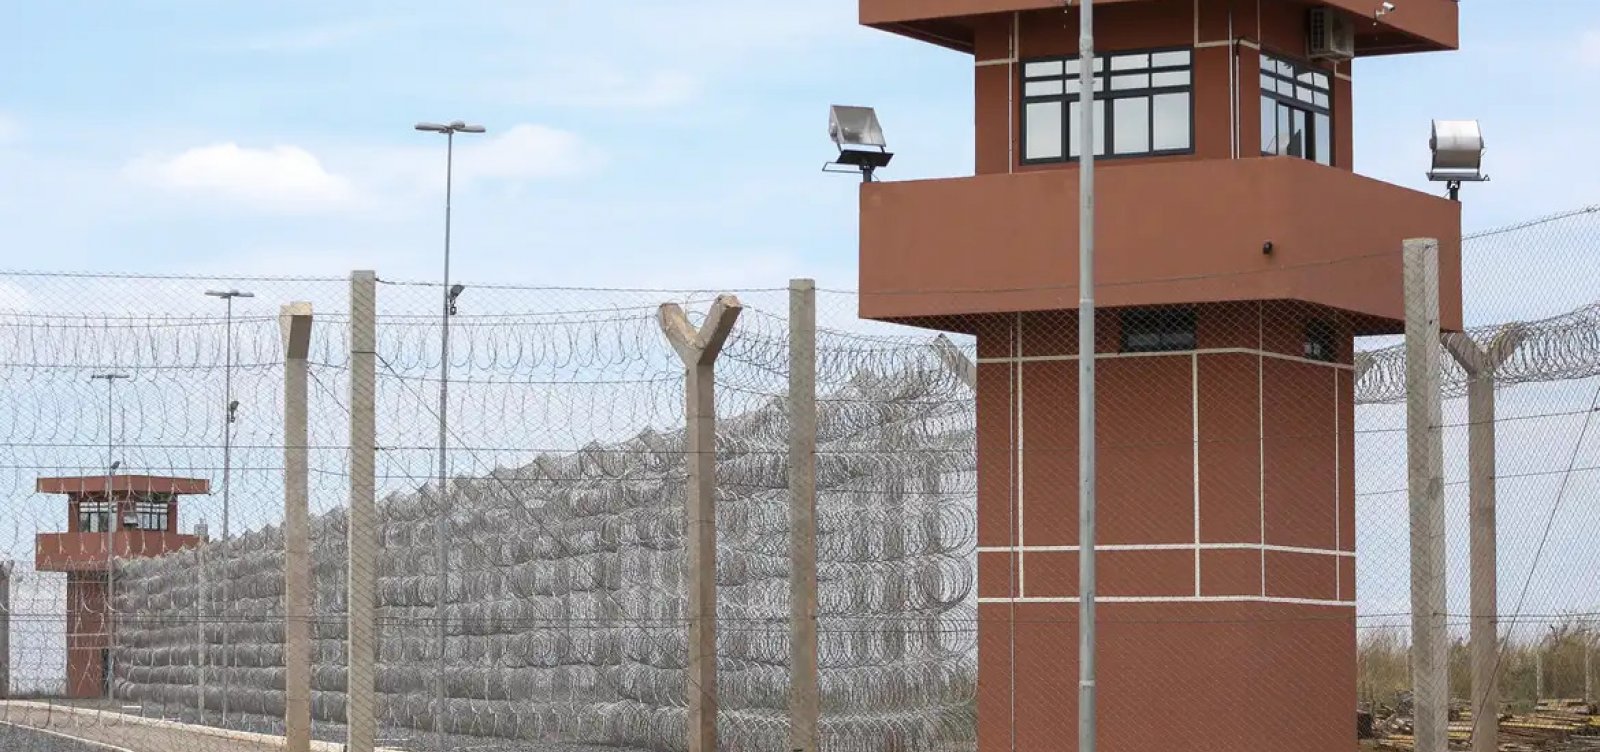 Governo muda protocolo de transferência de presos após identificar plano para libertar Marcola